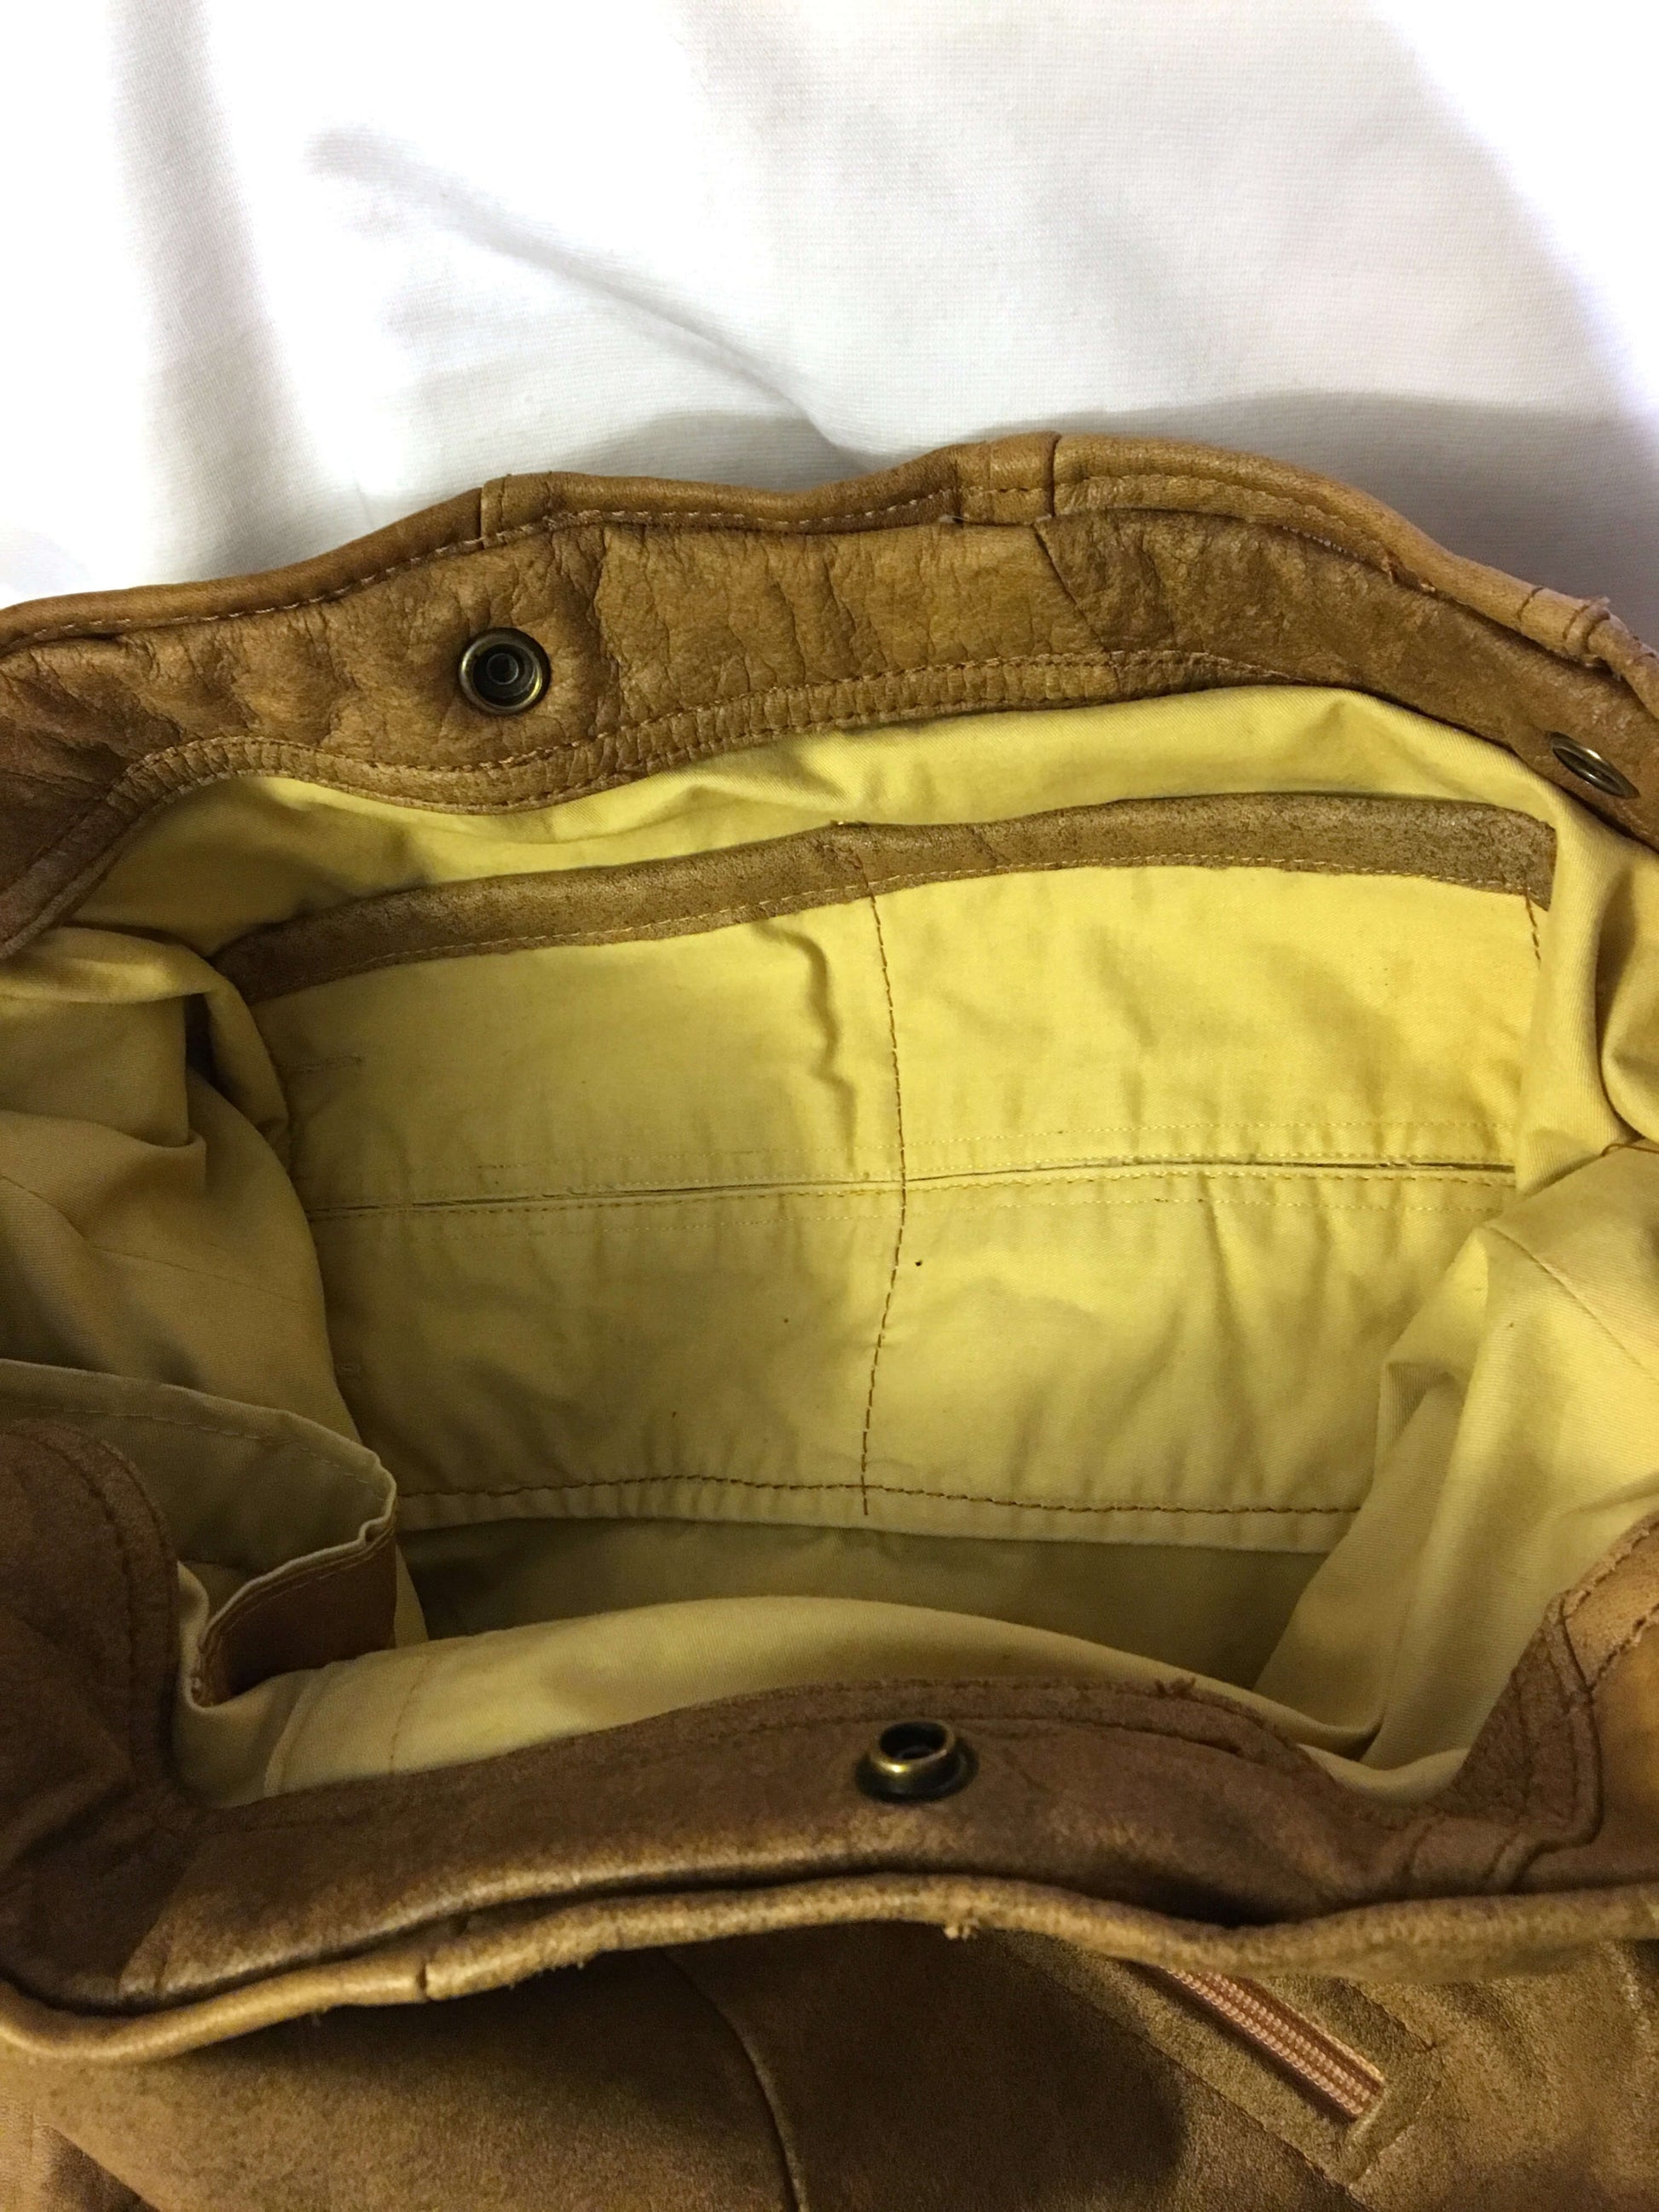 Tan Distressed Leather Hobo Bag - closeup